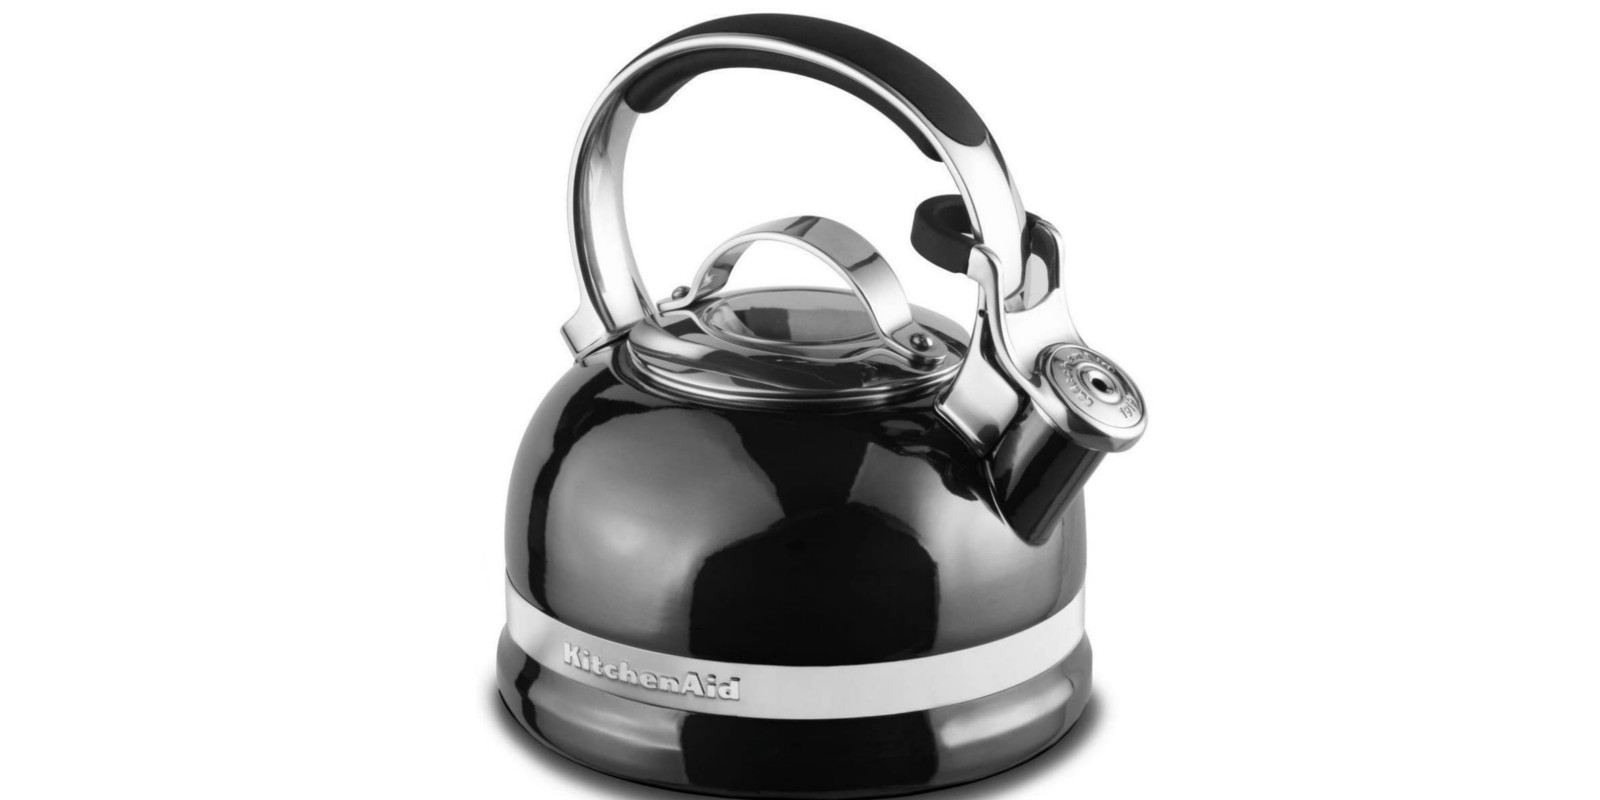 KitchenAid's retro-style whistling kettle now $30 shipped (Reg. up